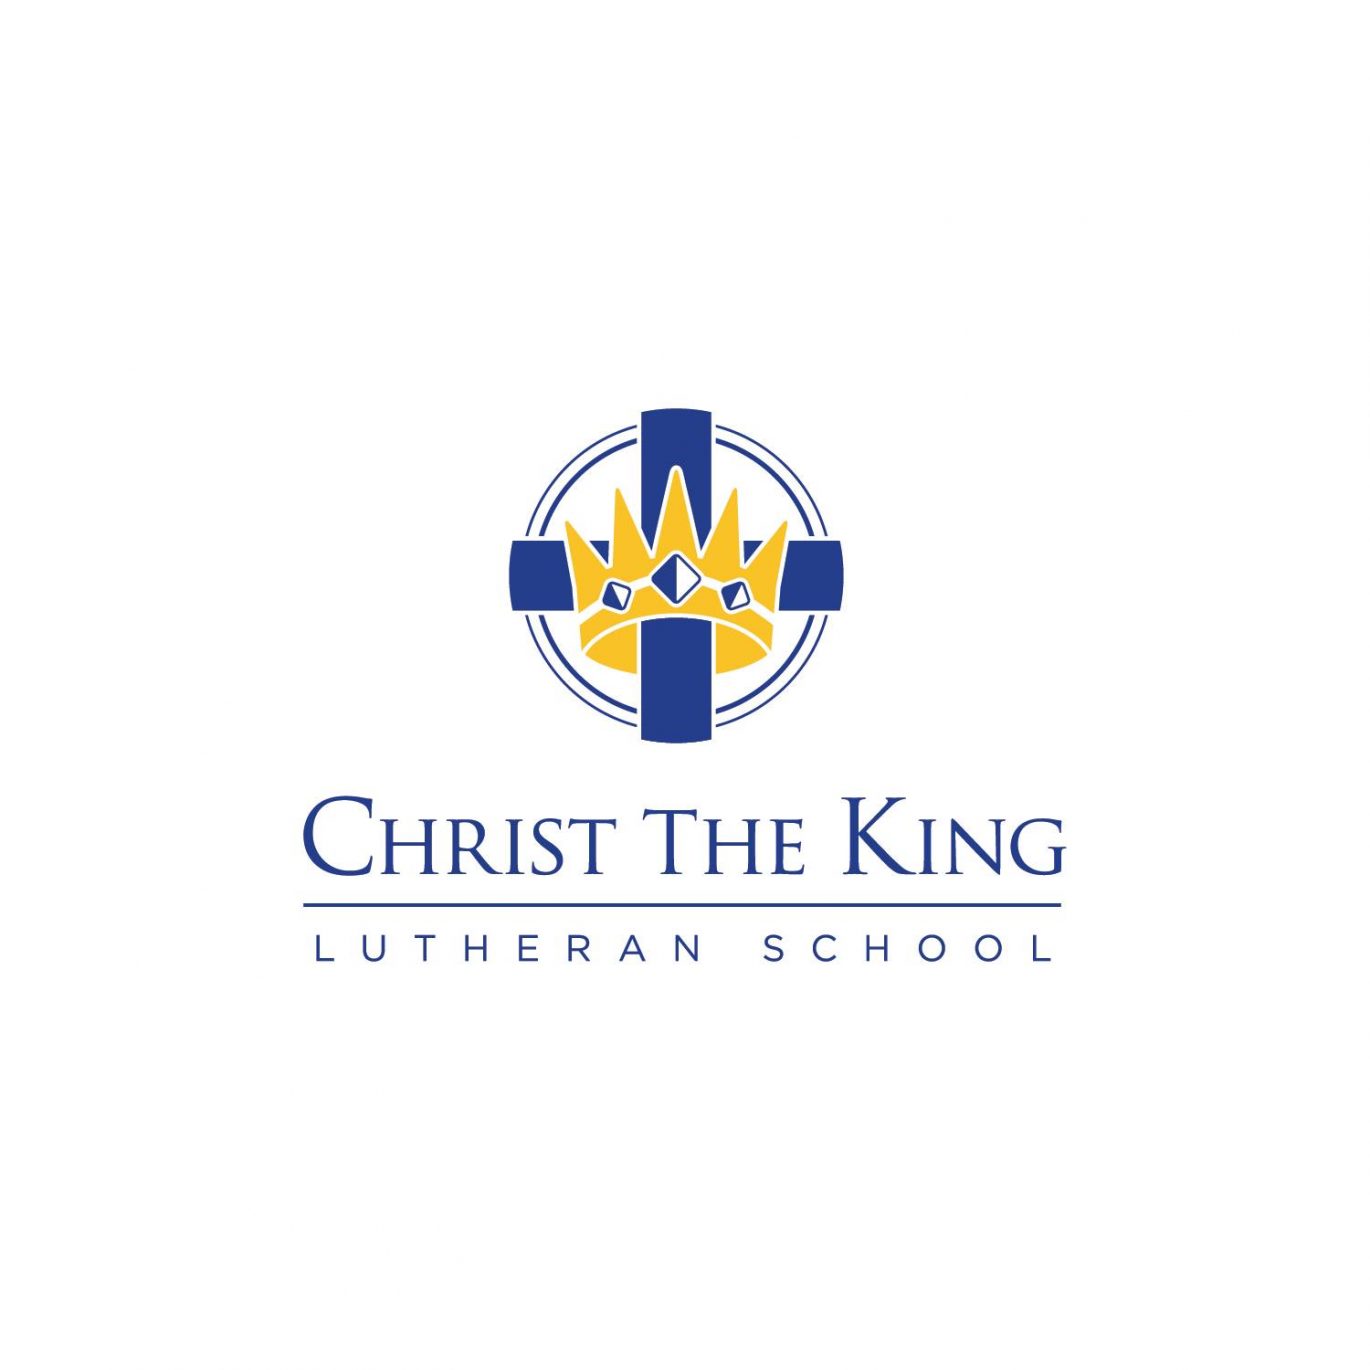 Christ the King Lutheran School